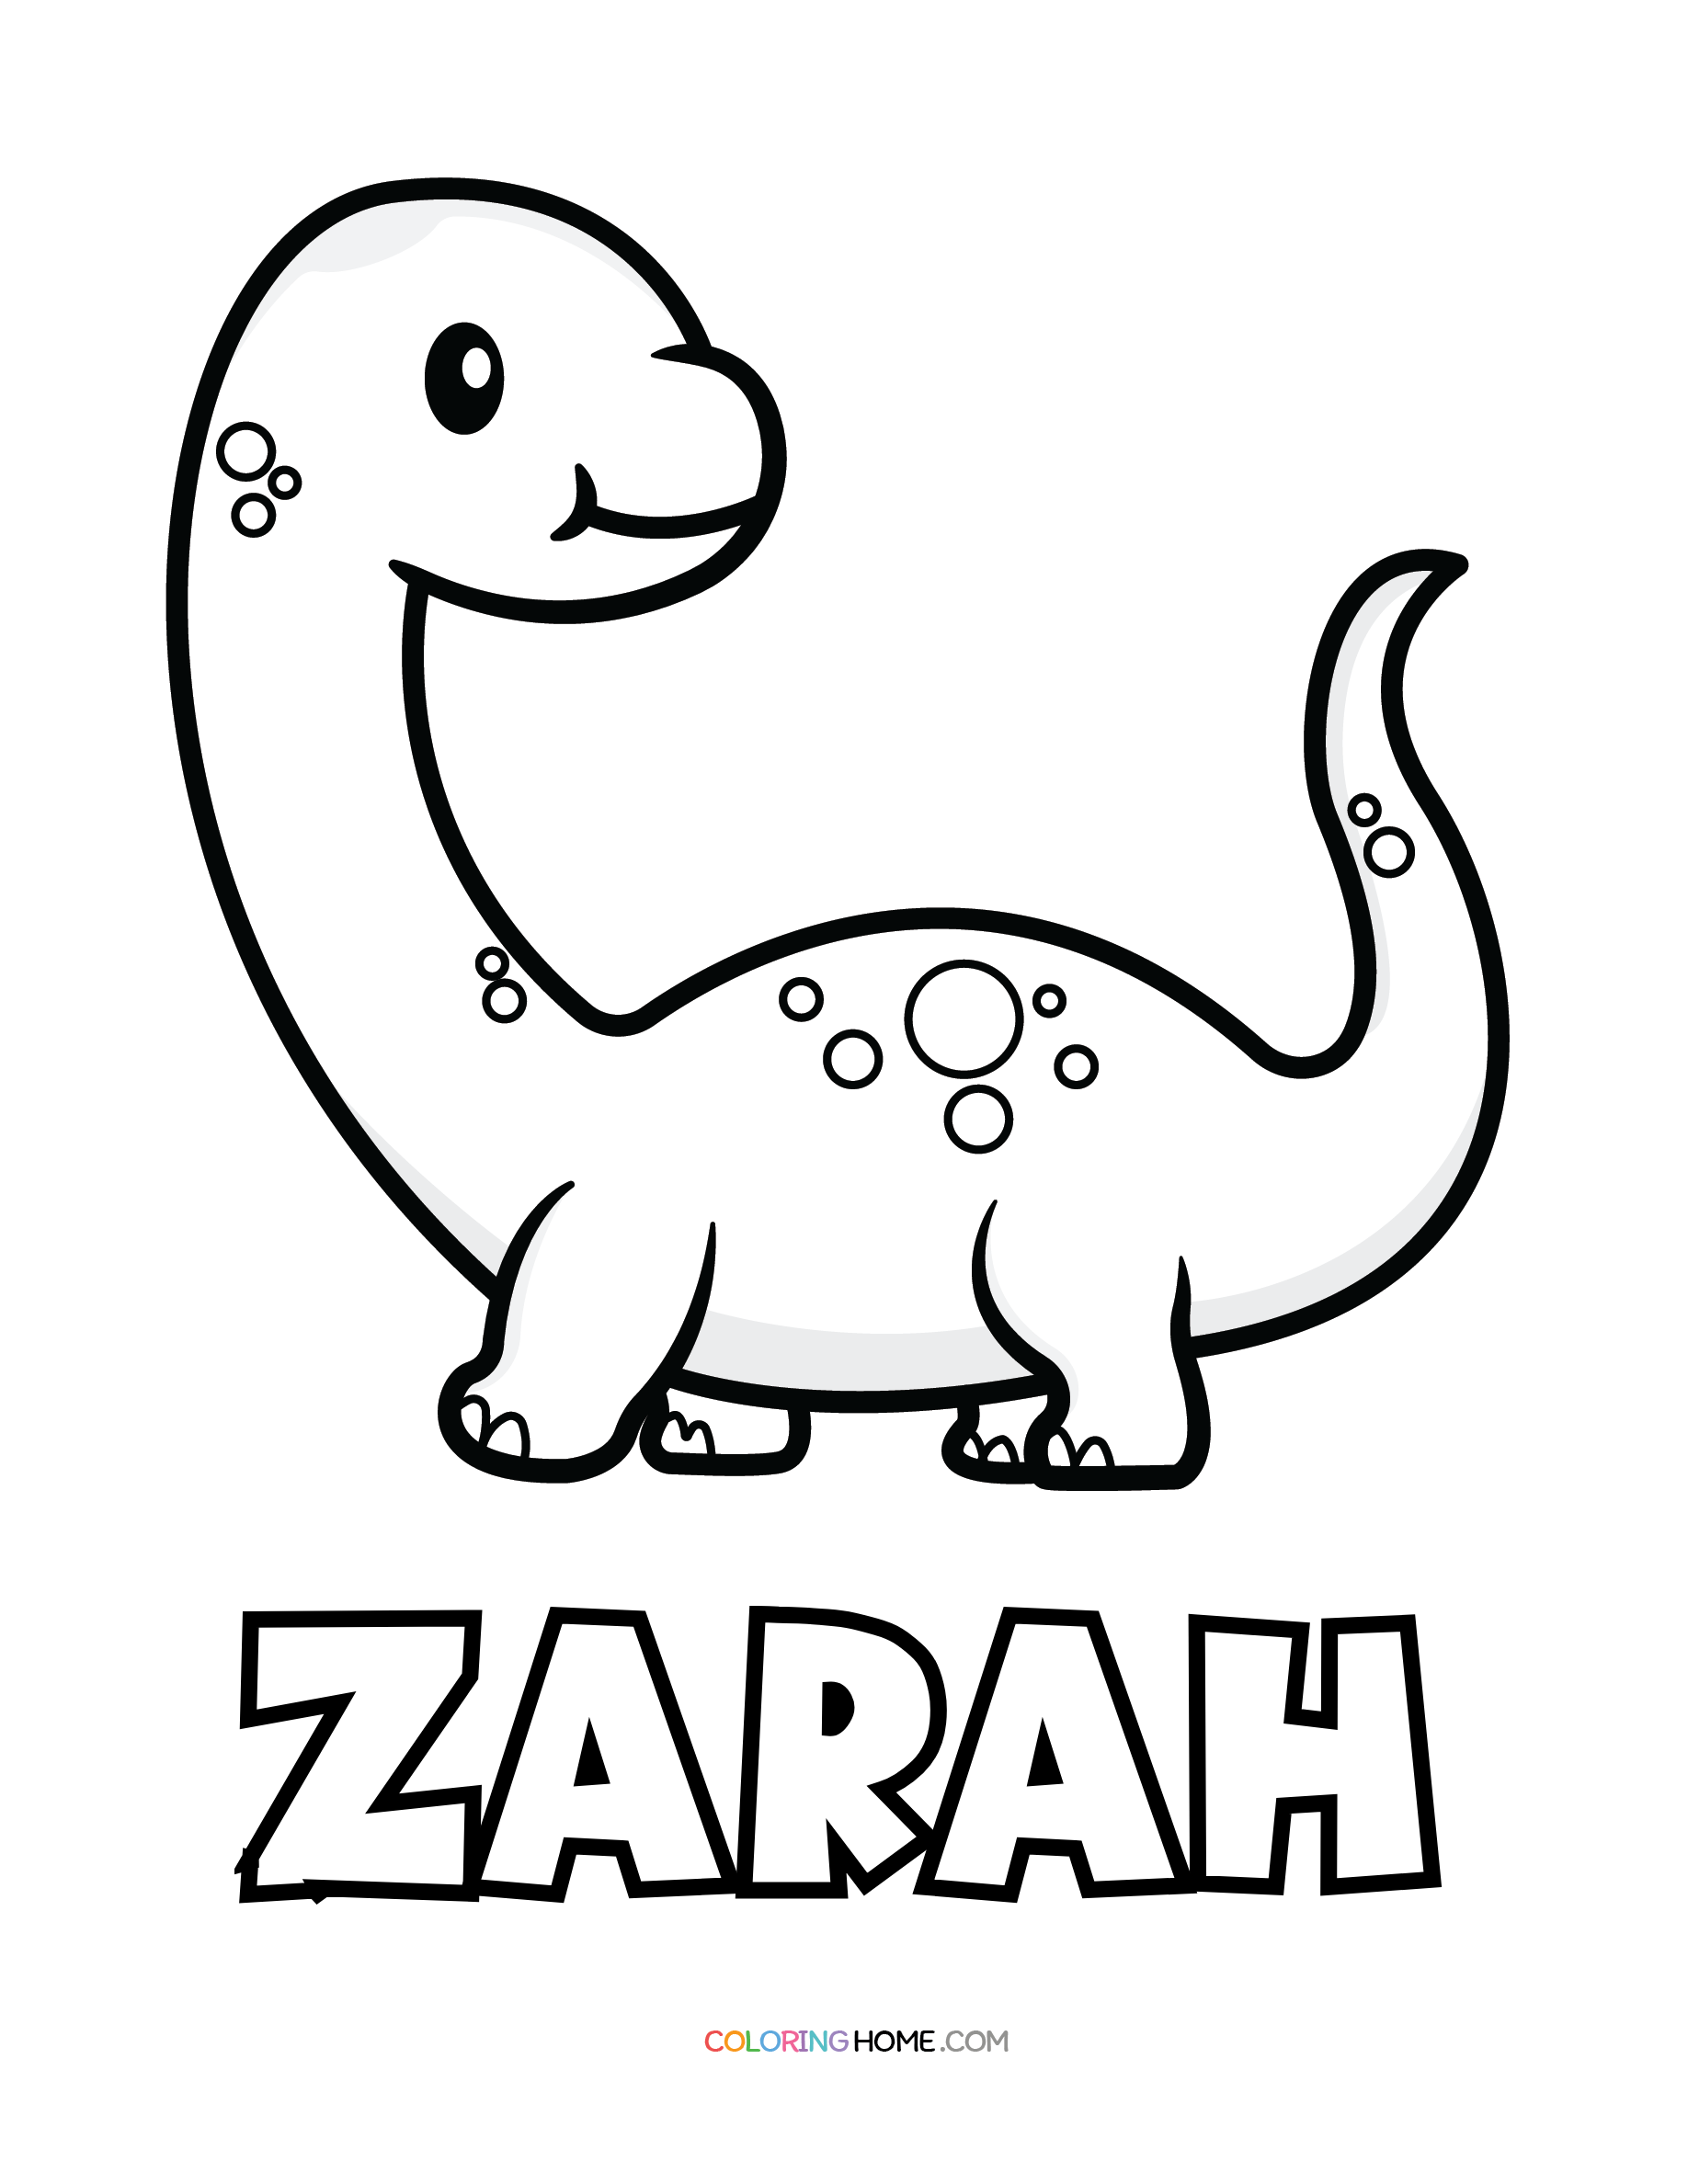 Zarah dinosaur coloring page